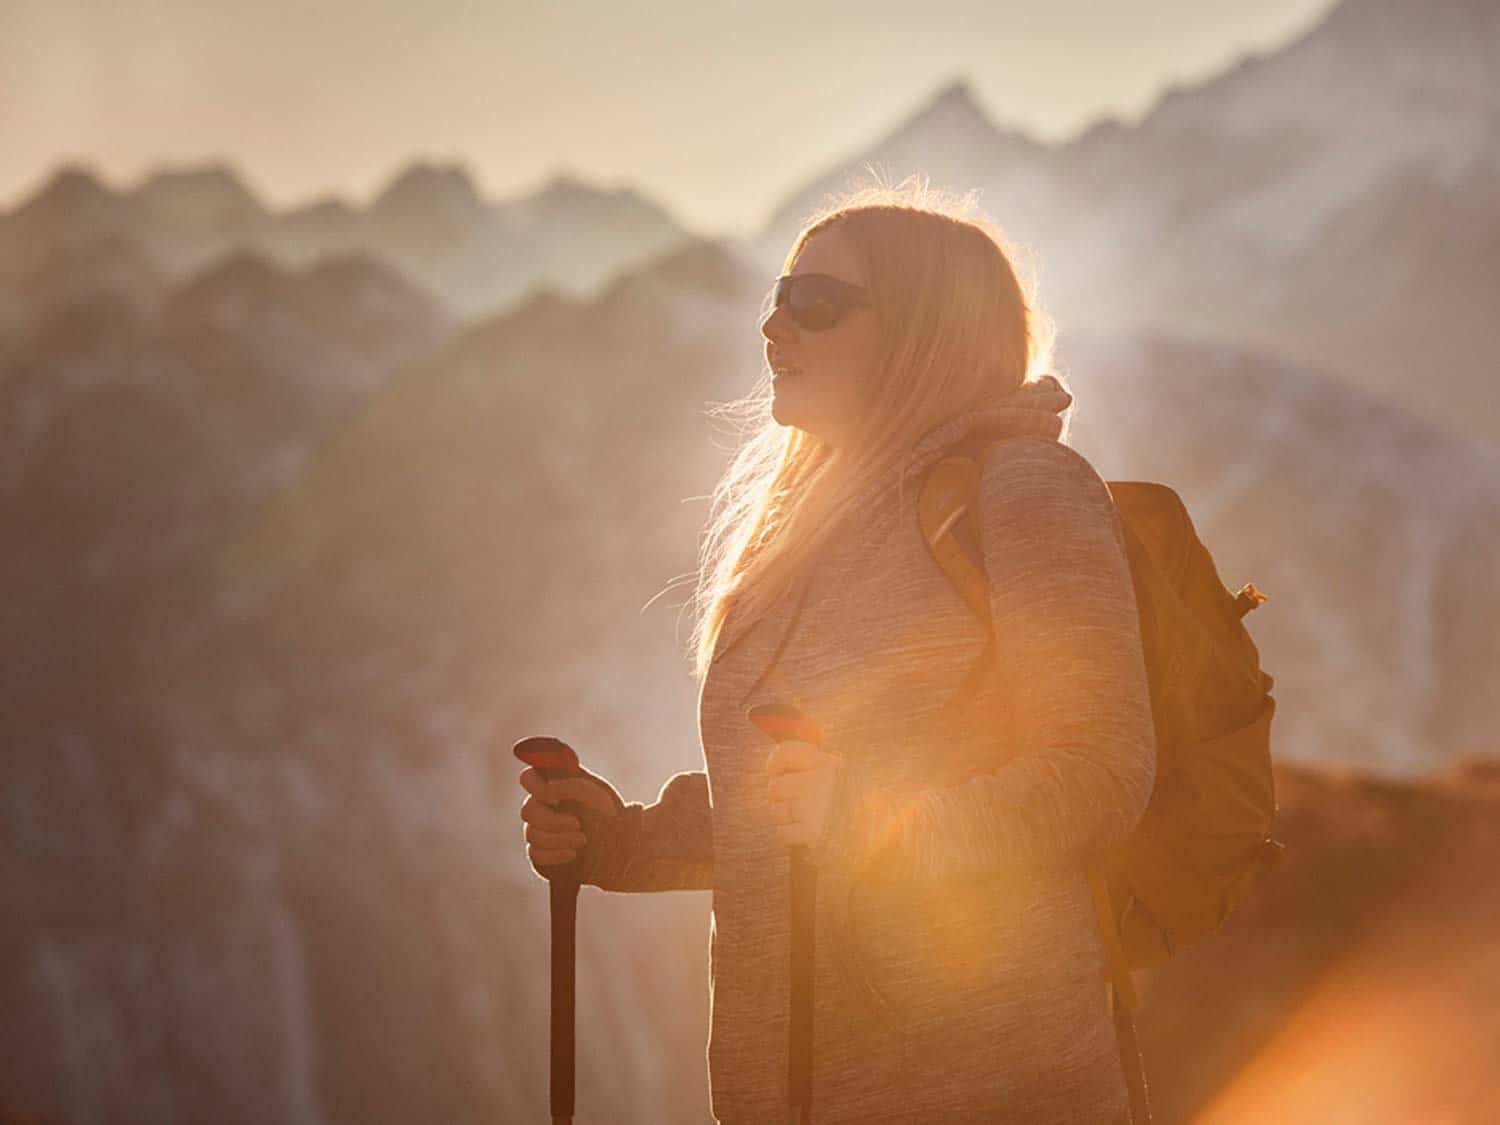 Leki Sherpa trekking poles against a sunset scene in the mountains